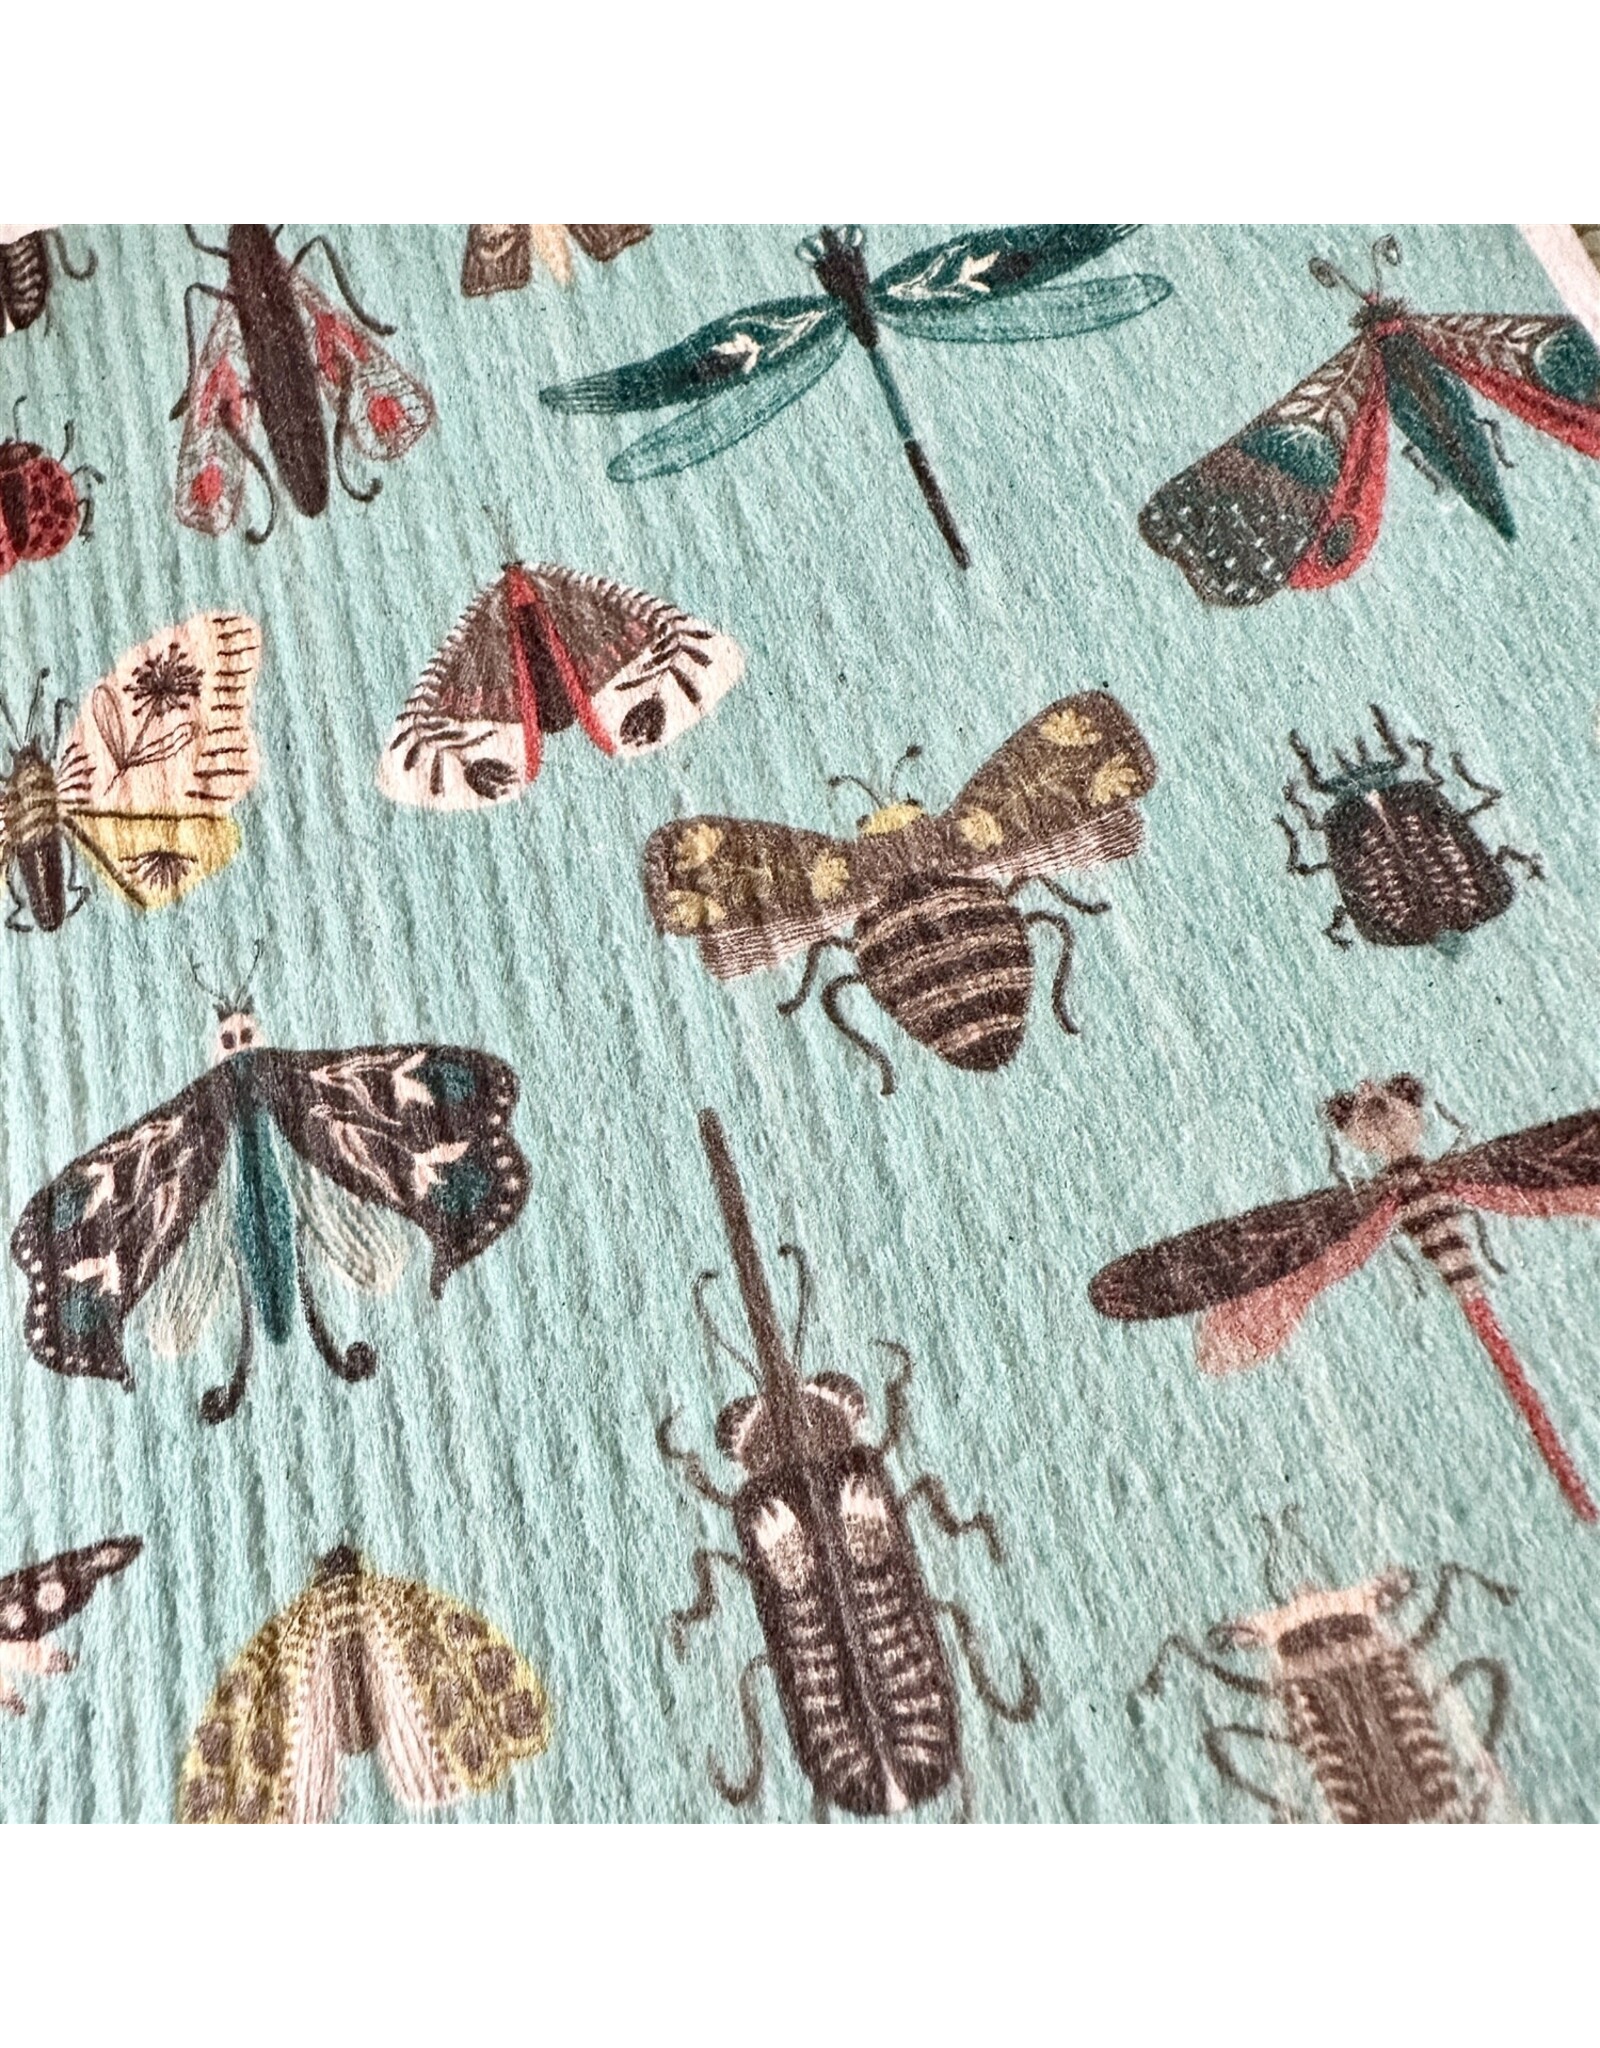 Pika & Bear Pika & Bear - "Arthropoda" Folk Insects Design Swedish Dishcloth